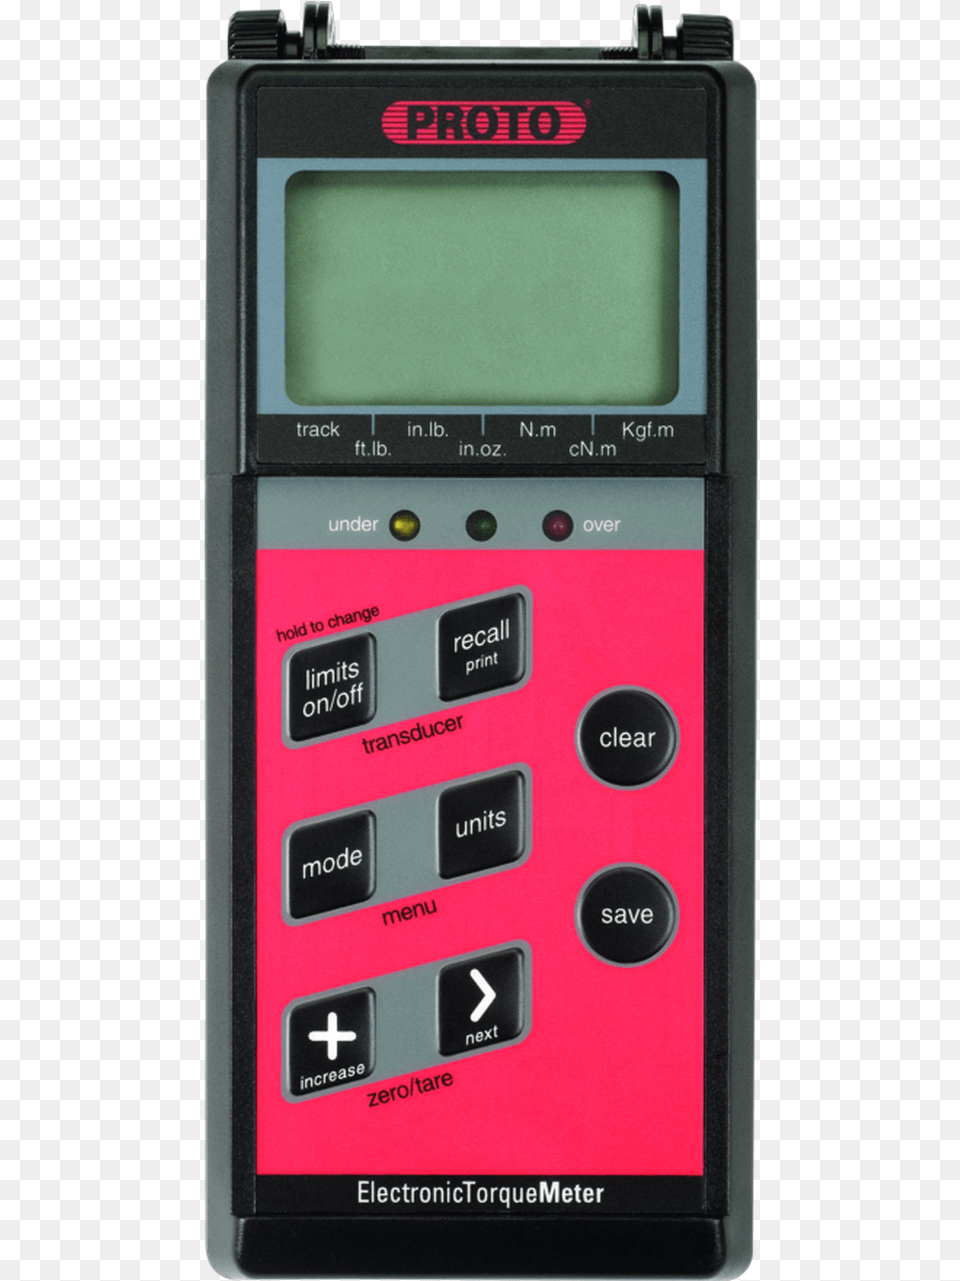 Proto J6360b Electronic Torque Meter, Electronics, Mobile Phone, Phone, Computer Hardware Png Image